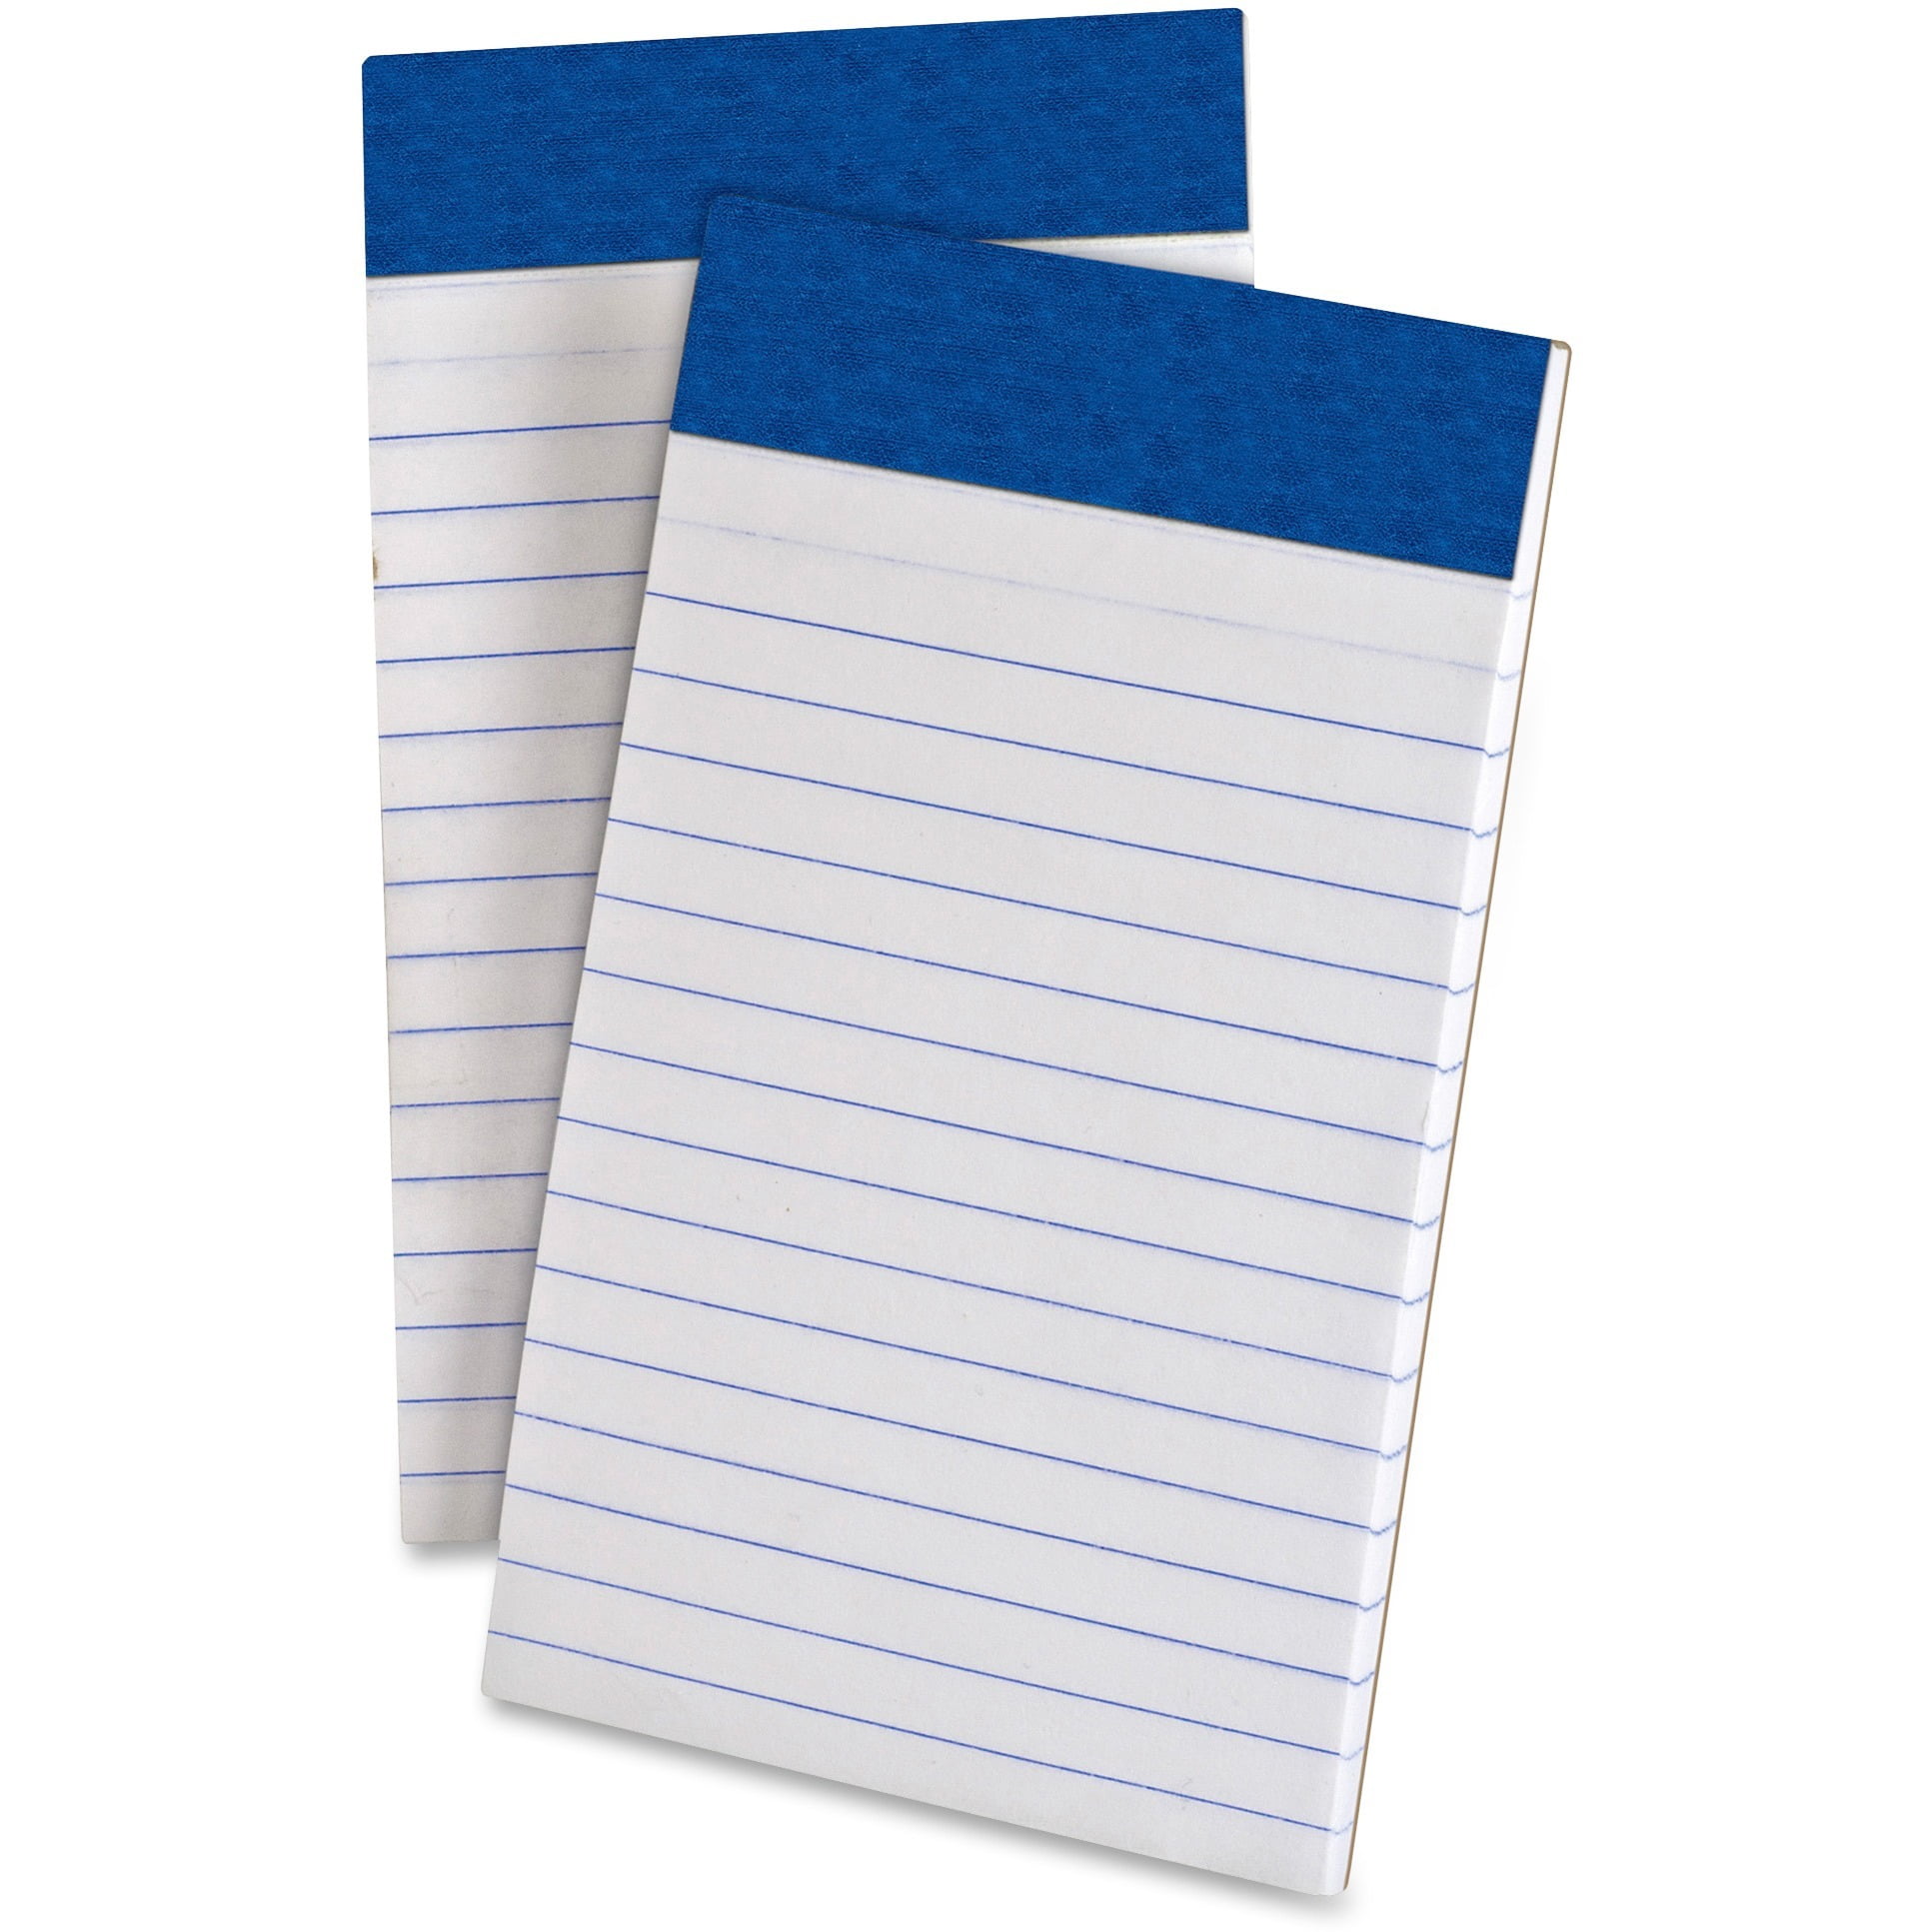 Ampad Writing Pad Letter White Narrow Rule Dozen 50-Sheets Micro Perfed 